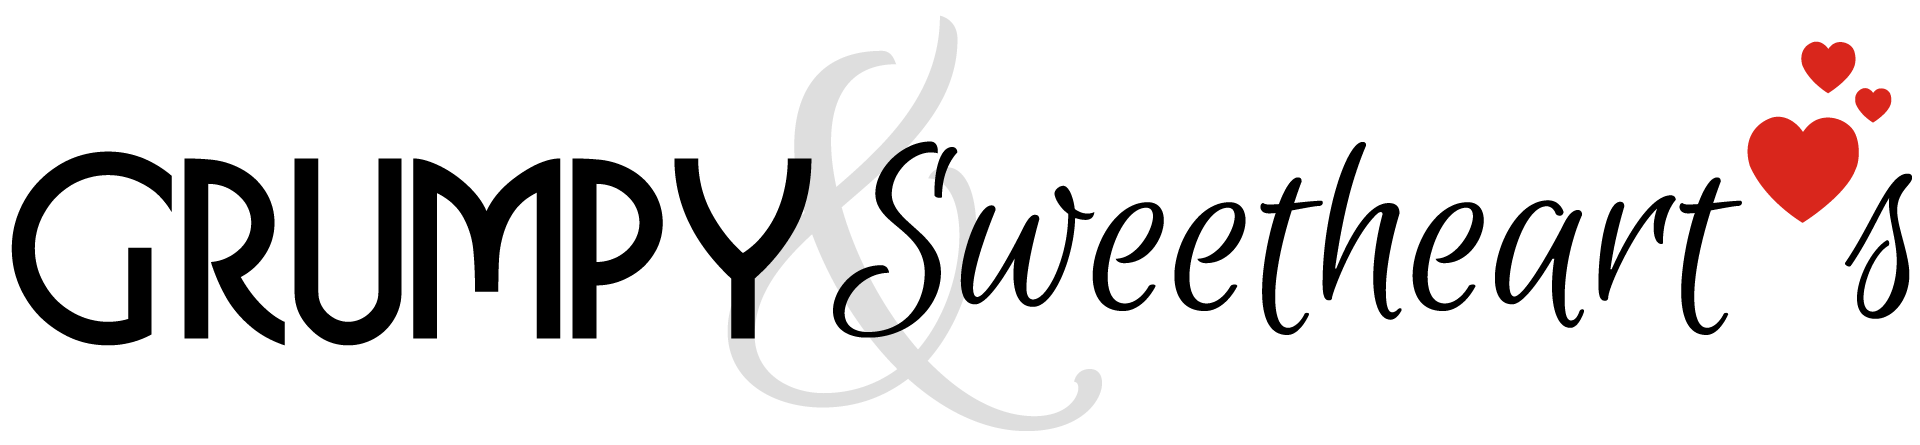 Sweathearts Logo - Grumpy-&-Sweethearts-Logo-2-1920px – Grumpy & Sweethearts Cafe